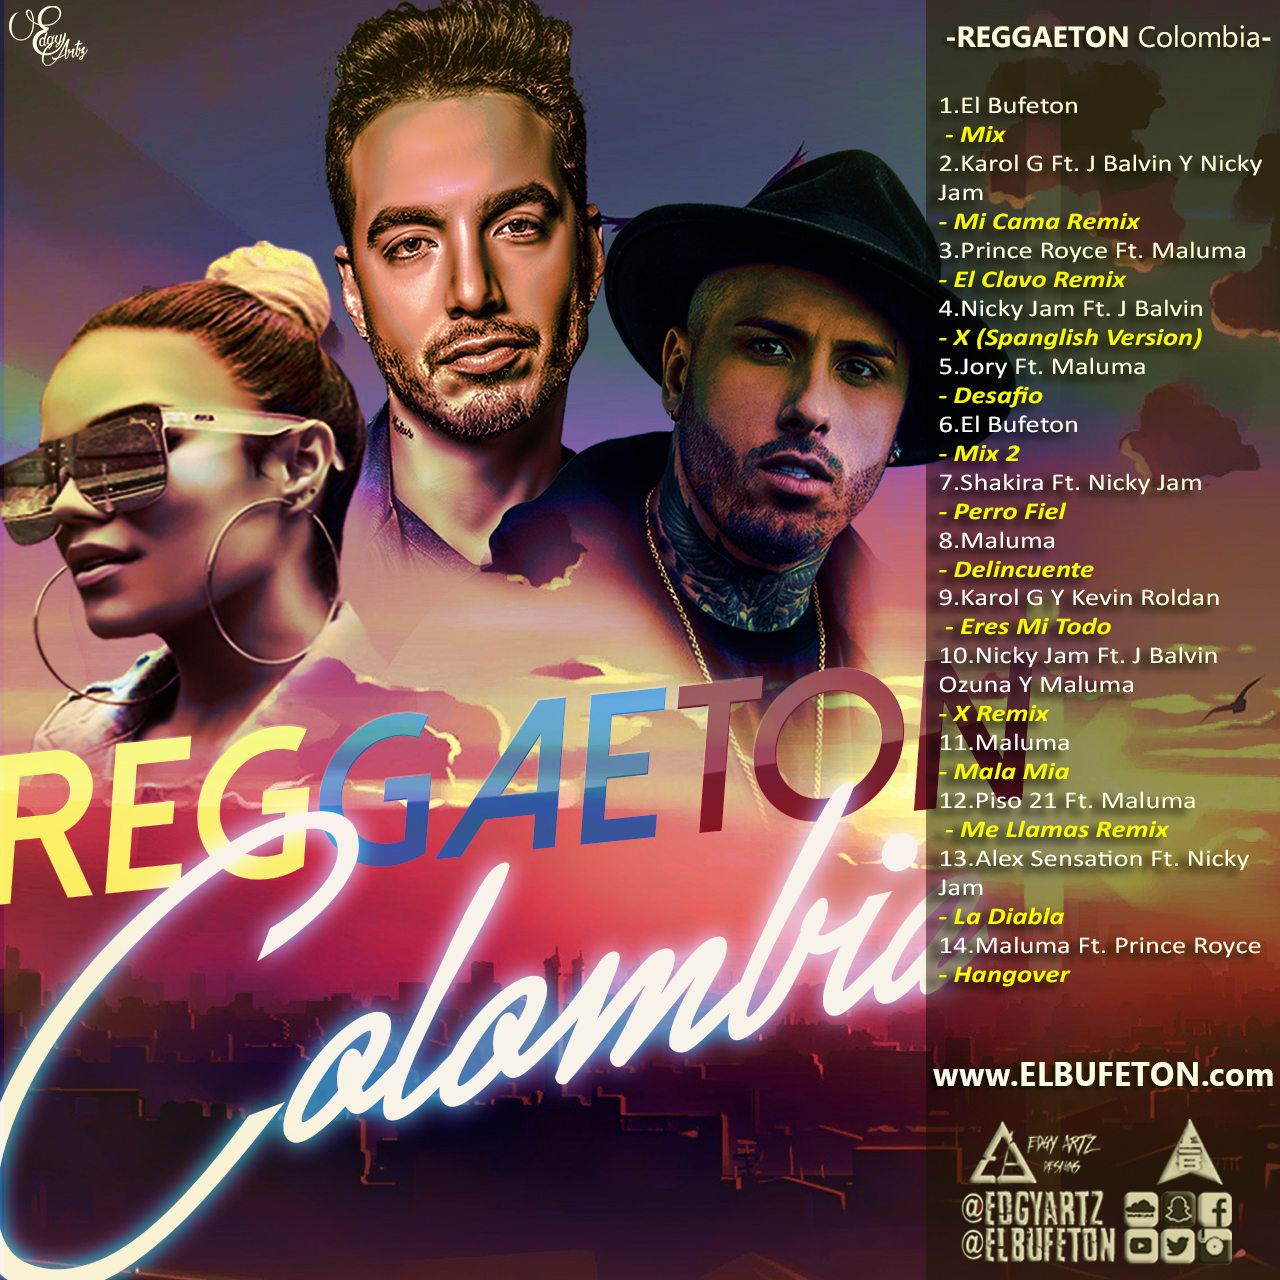 reggaeton colombia